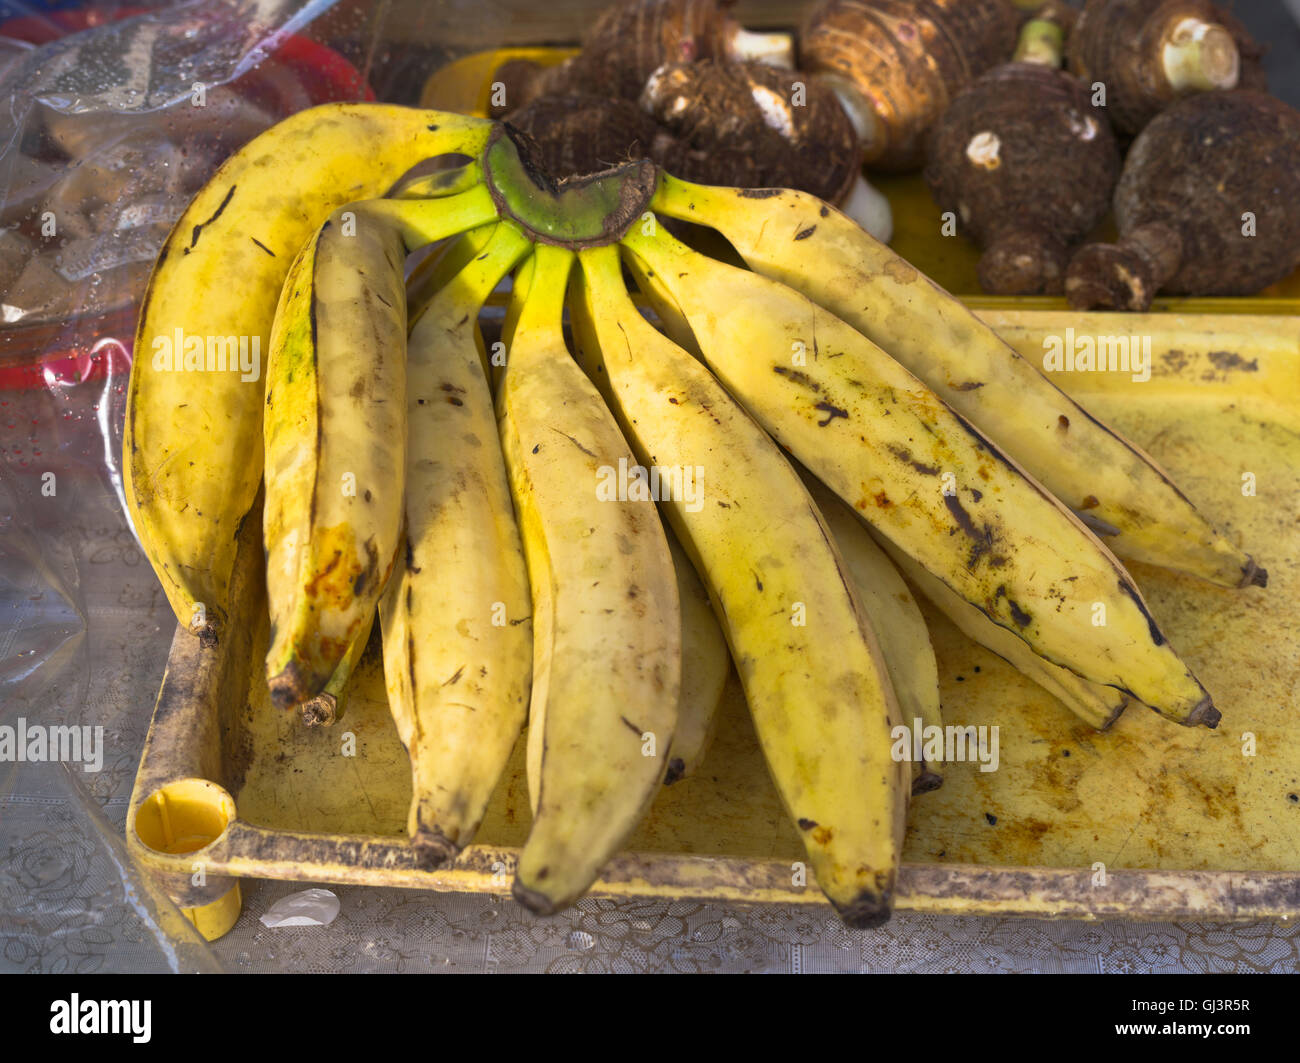 dh St George GRENADA CARIBBEAN Fruit market stall bunch of plantain bananas ripe banana Stock Photo